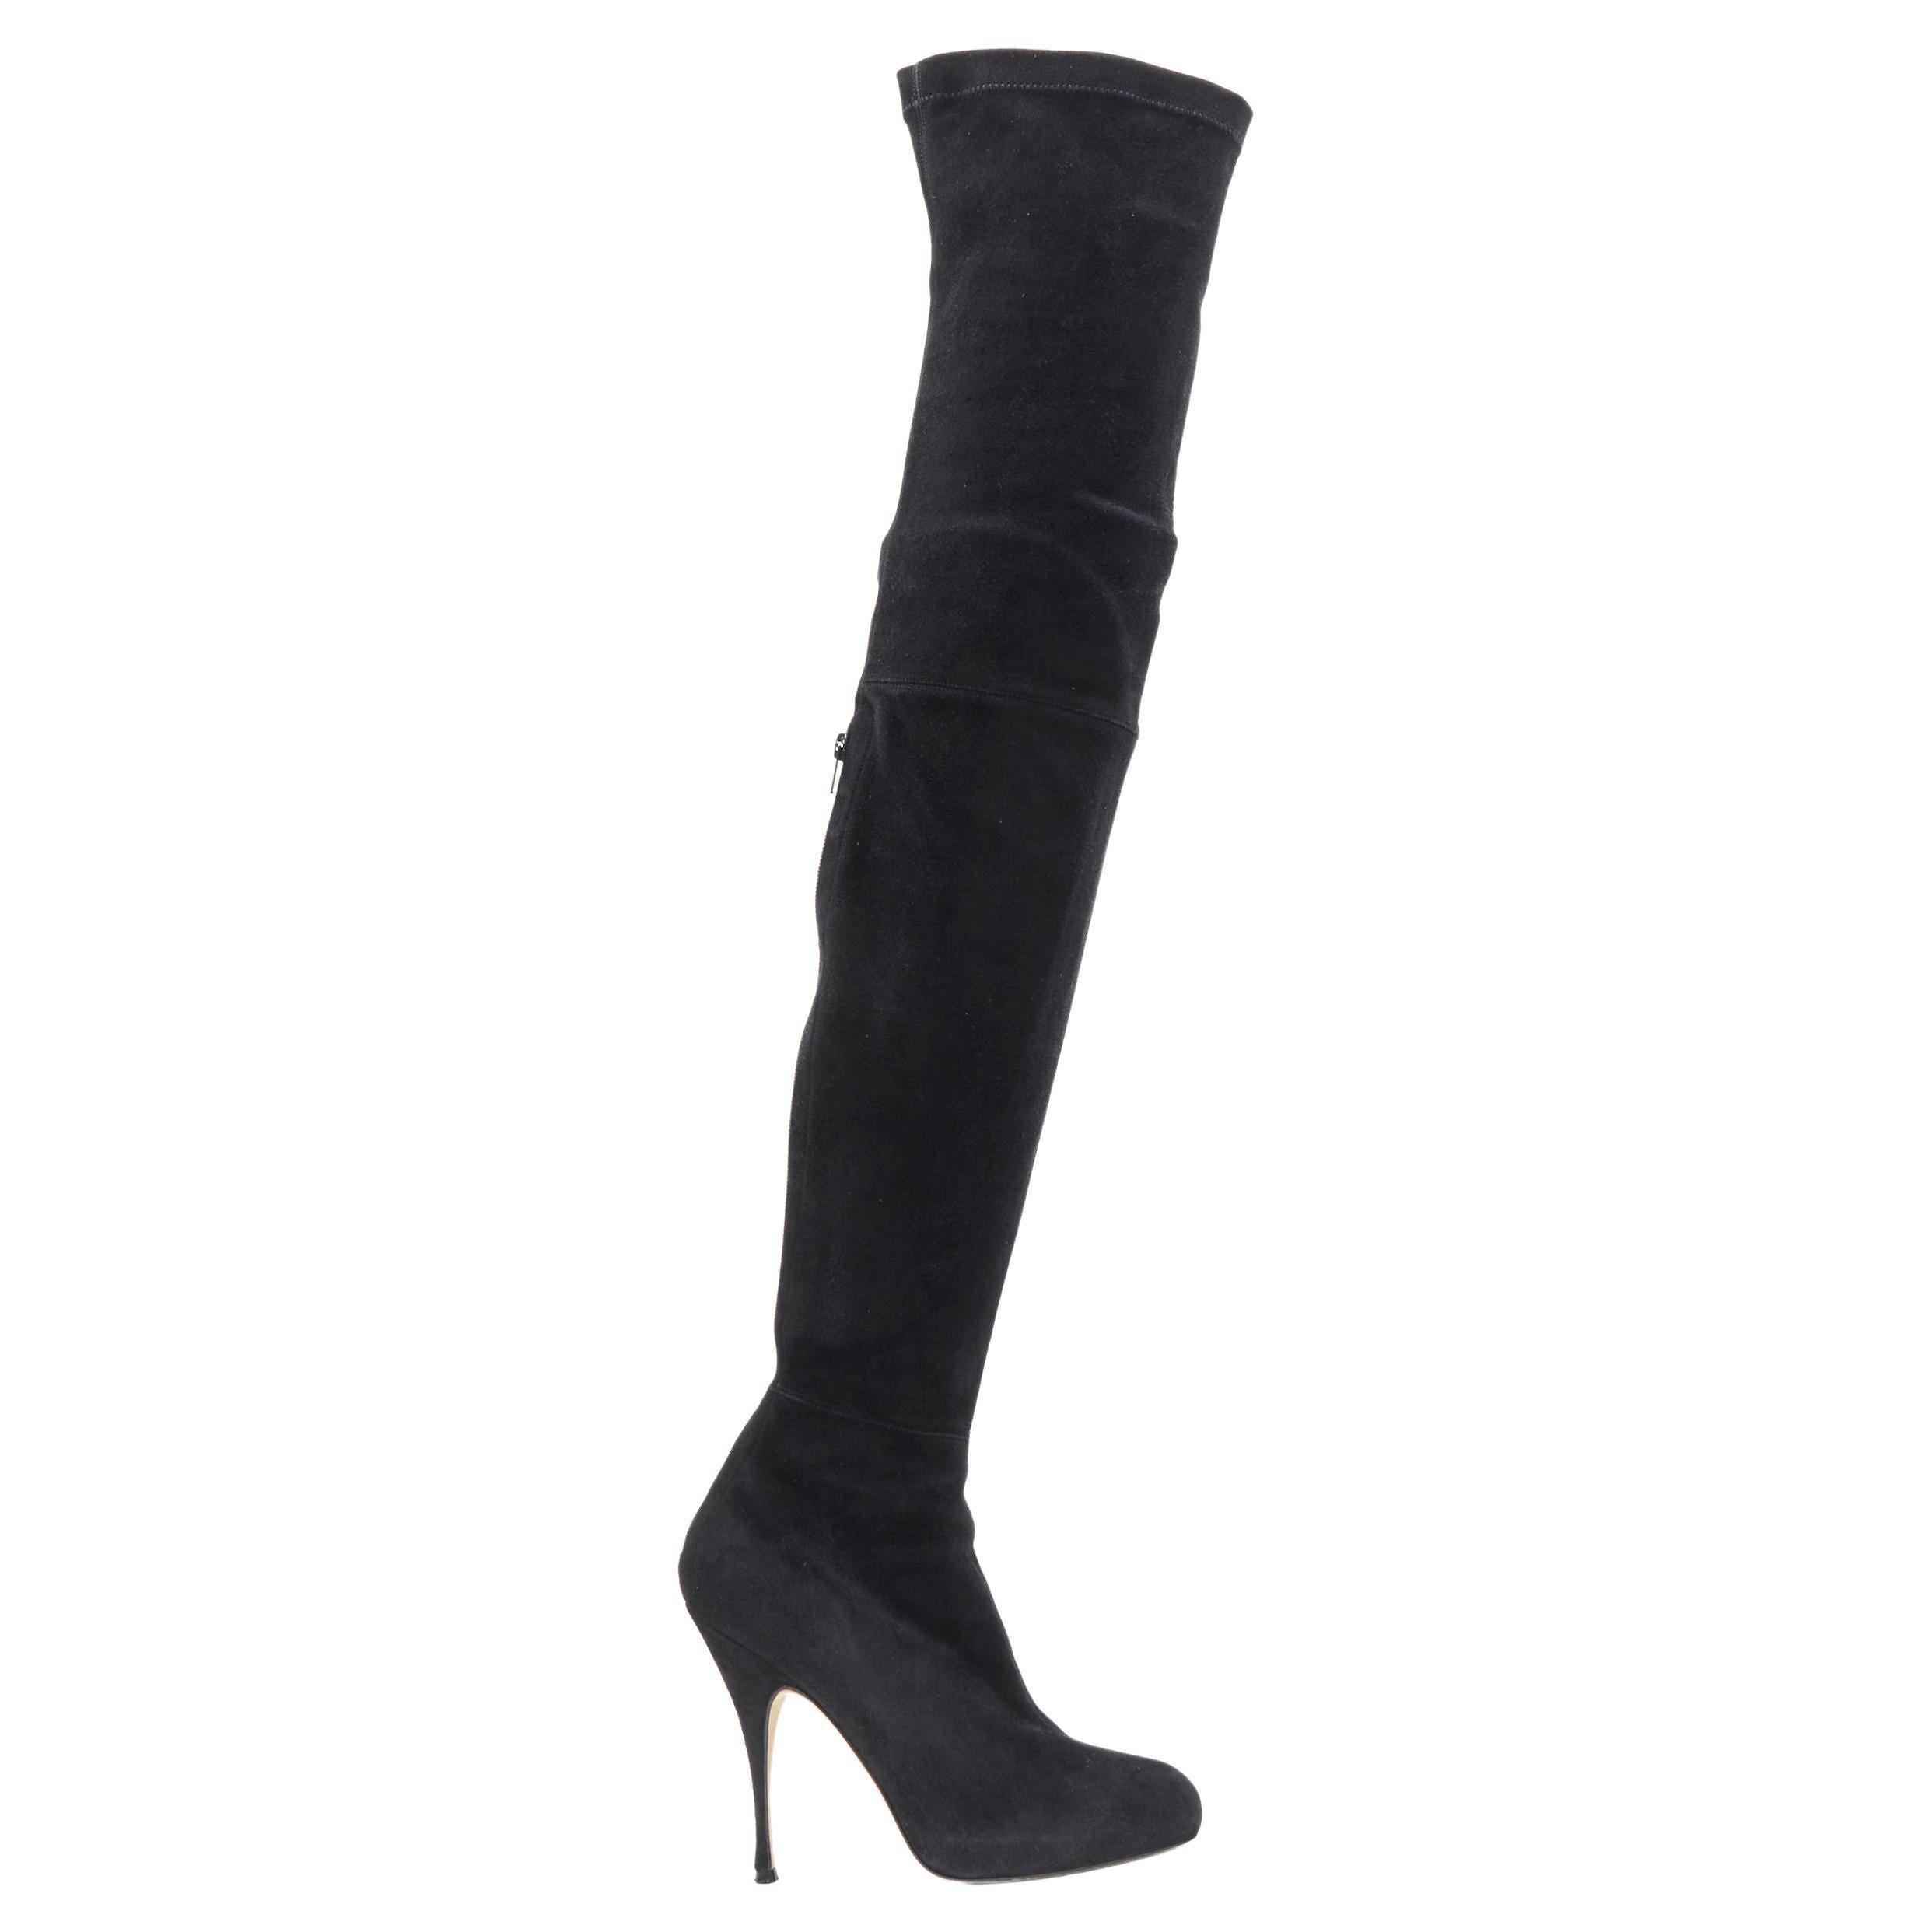 BRIAN ATWOOD black suede leather platform high heel thigh high boot EU38